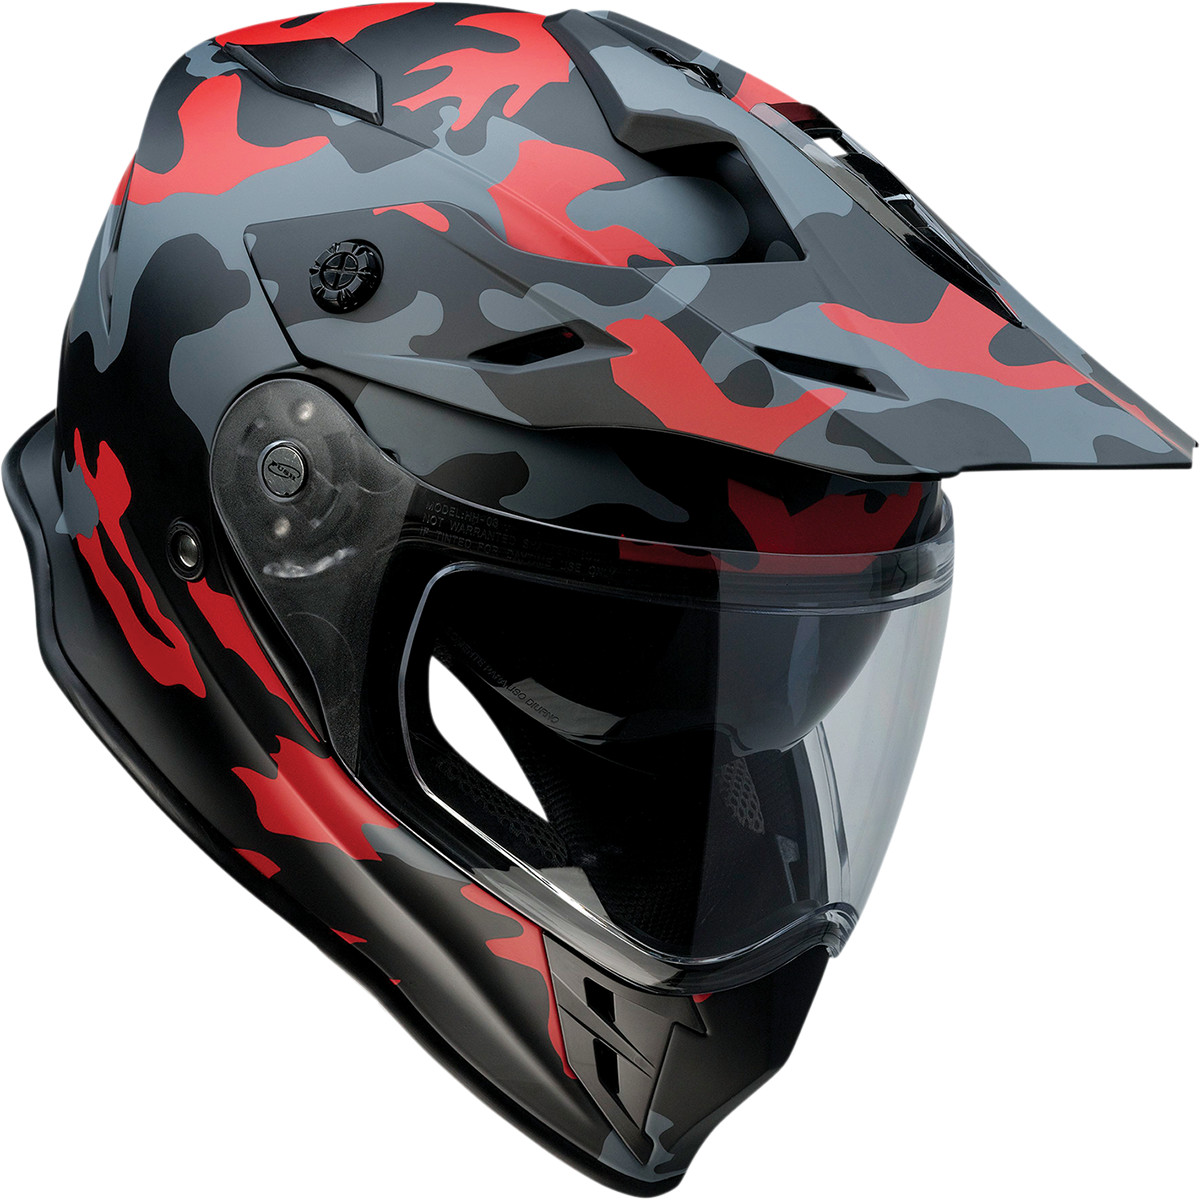 Range Dual Sport Helmet X-Small - Red Camo - Click Image to Close